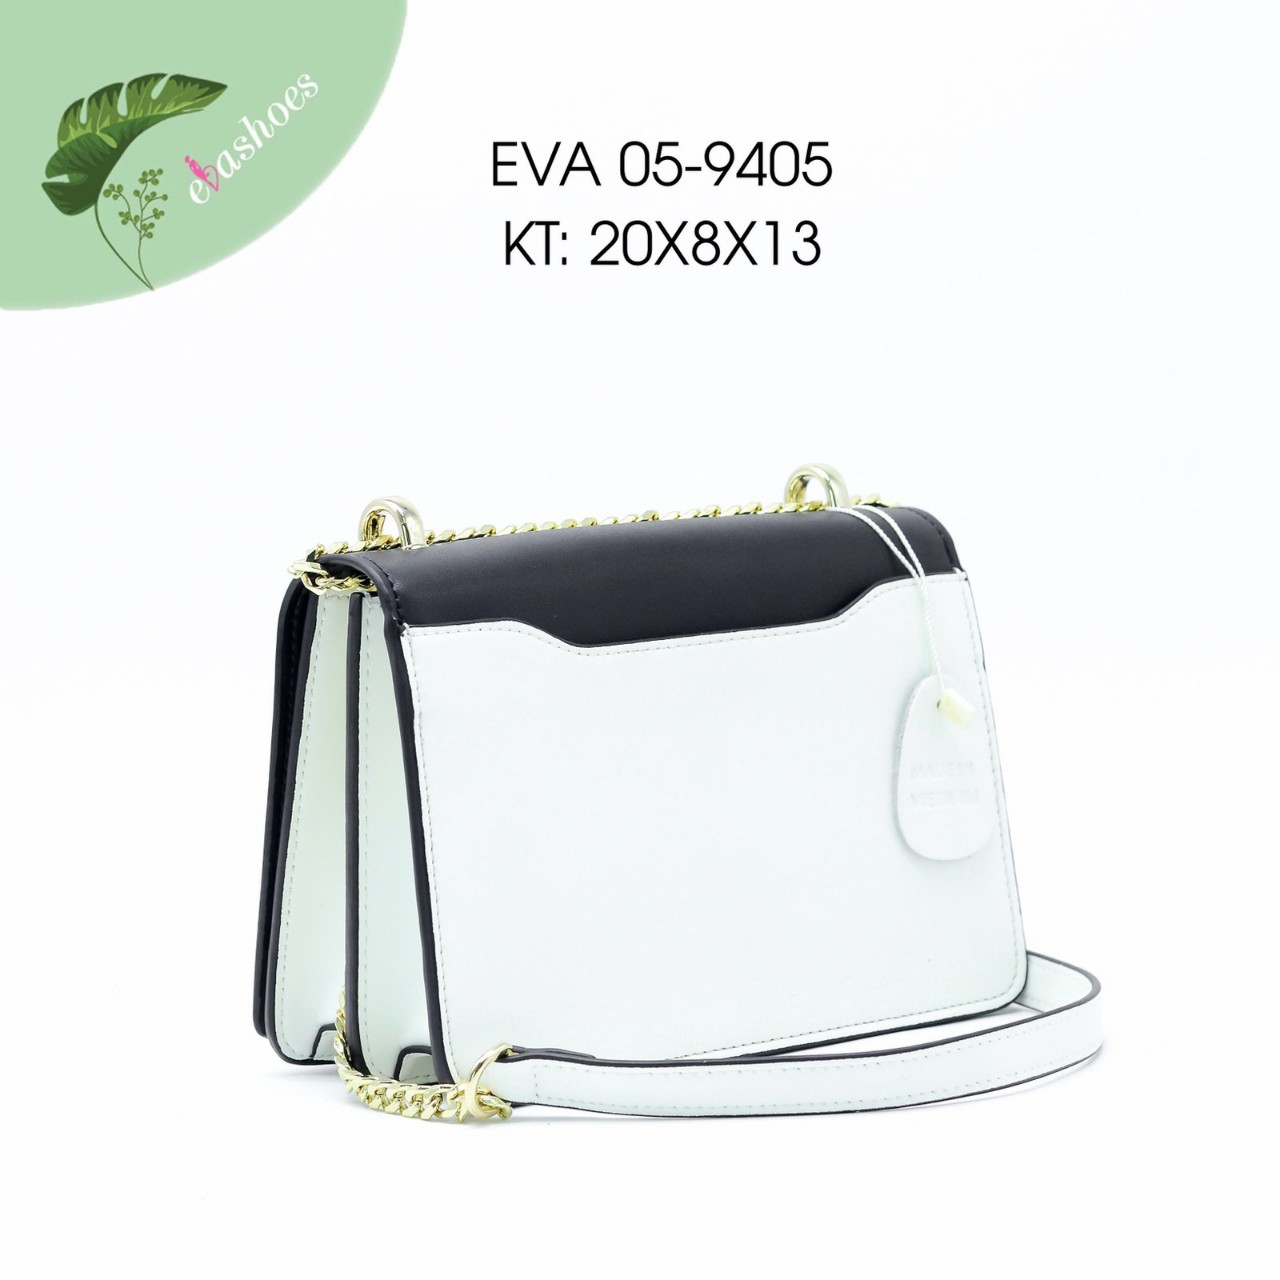 EVA 05-9405